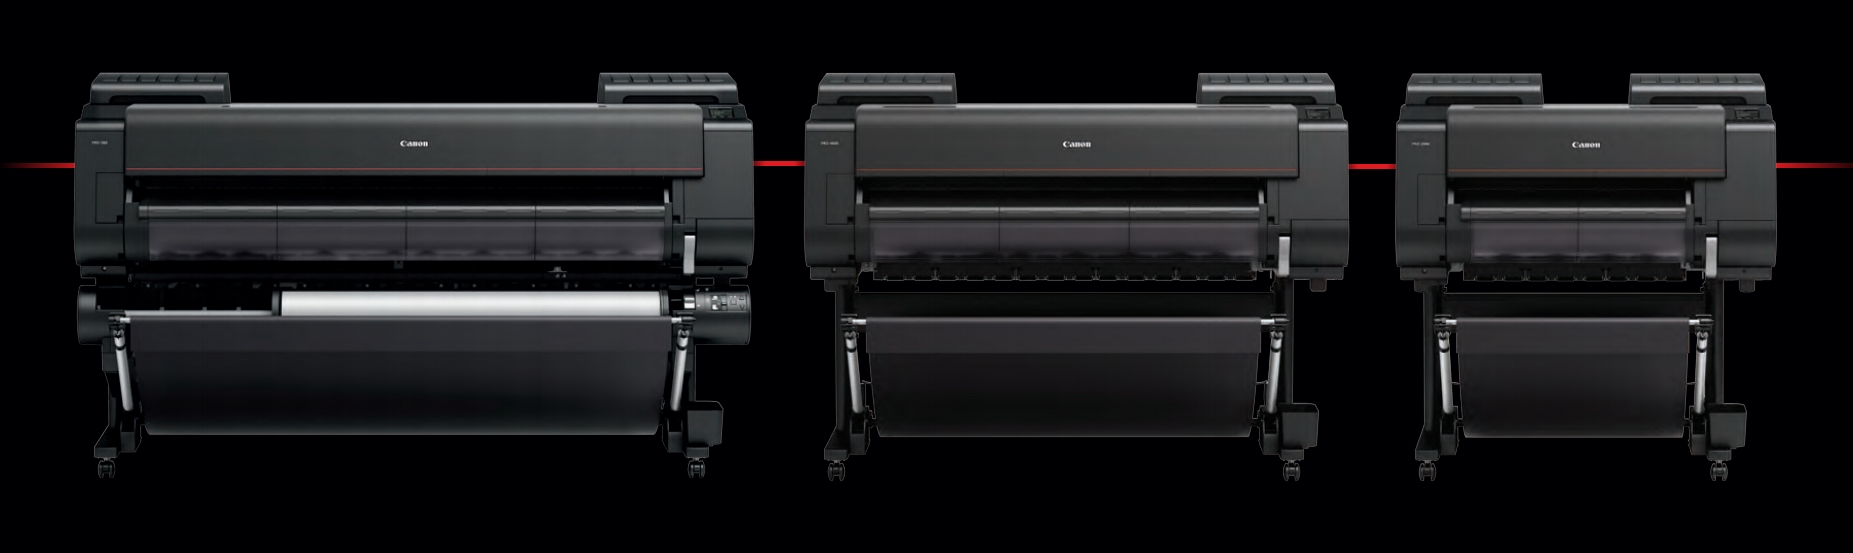 Canon imagePROGRAF PRO Series Plotter Printers